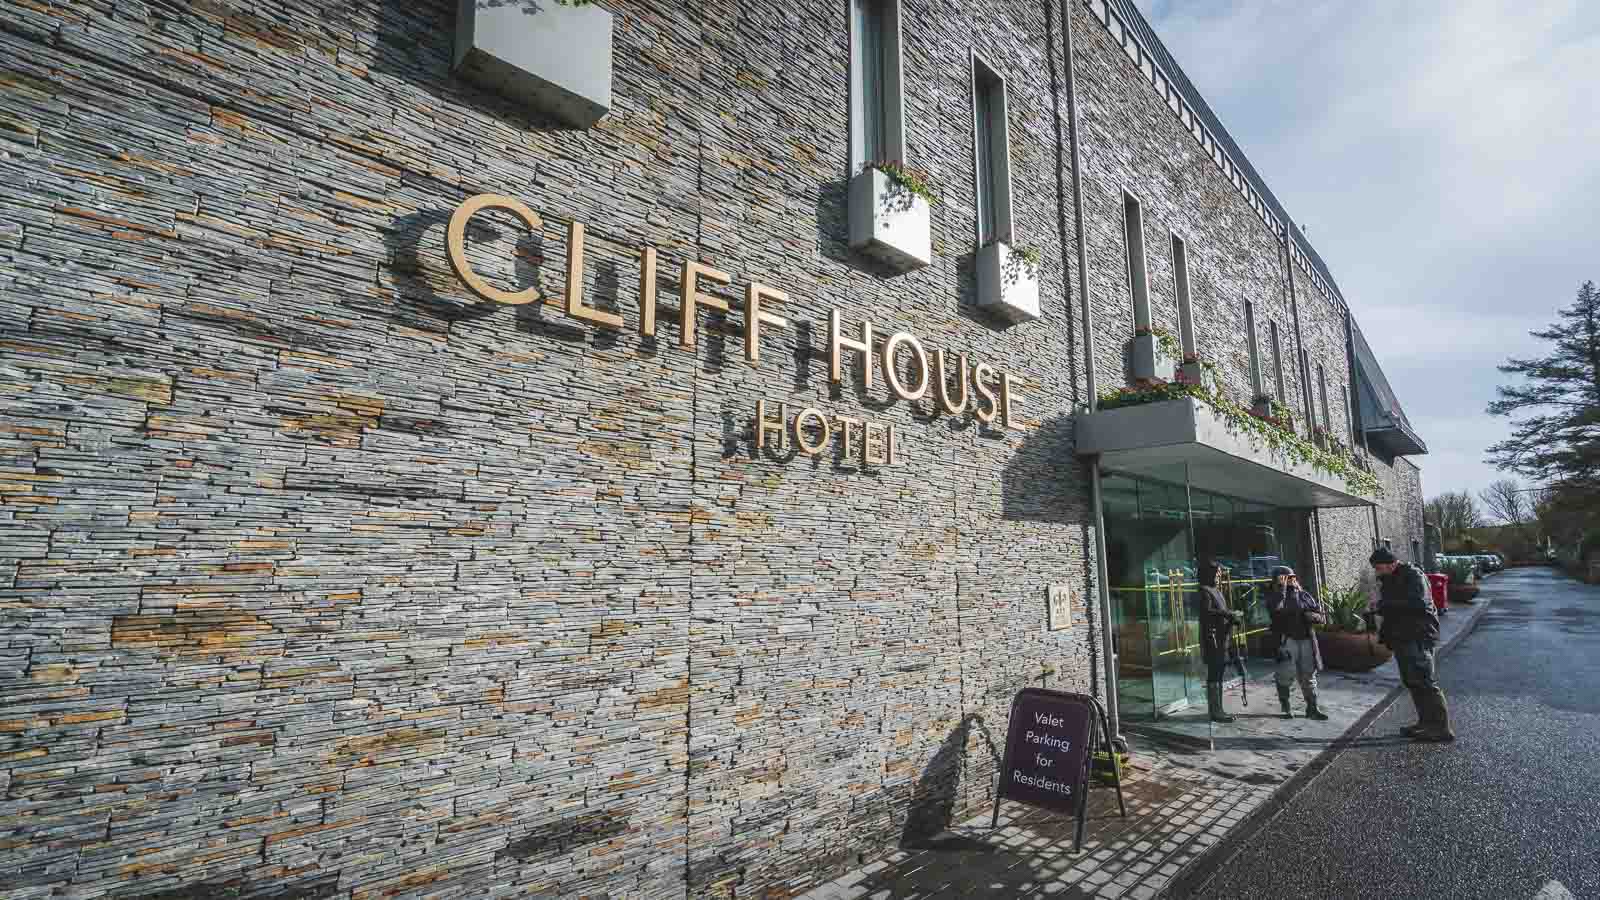 Cliff House Hotel Ireland